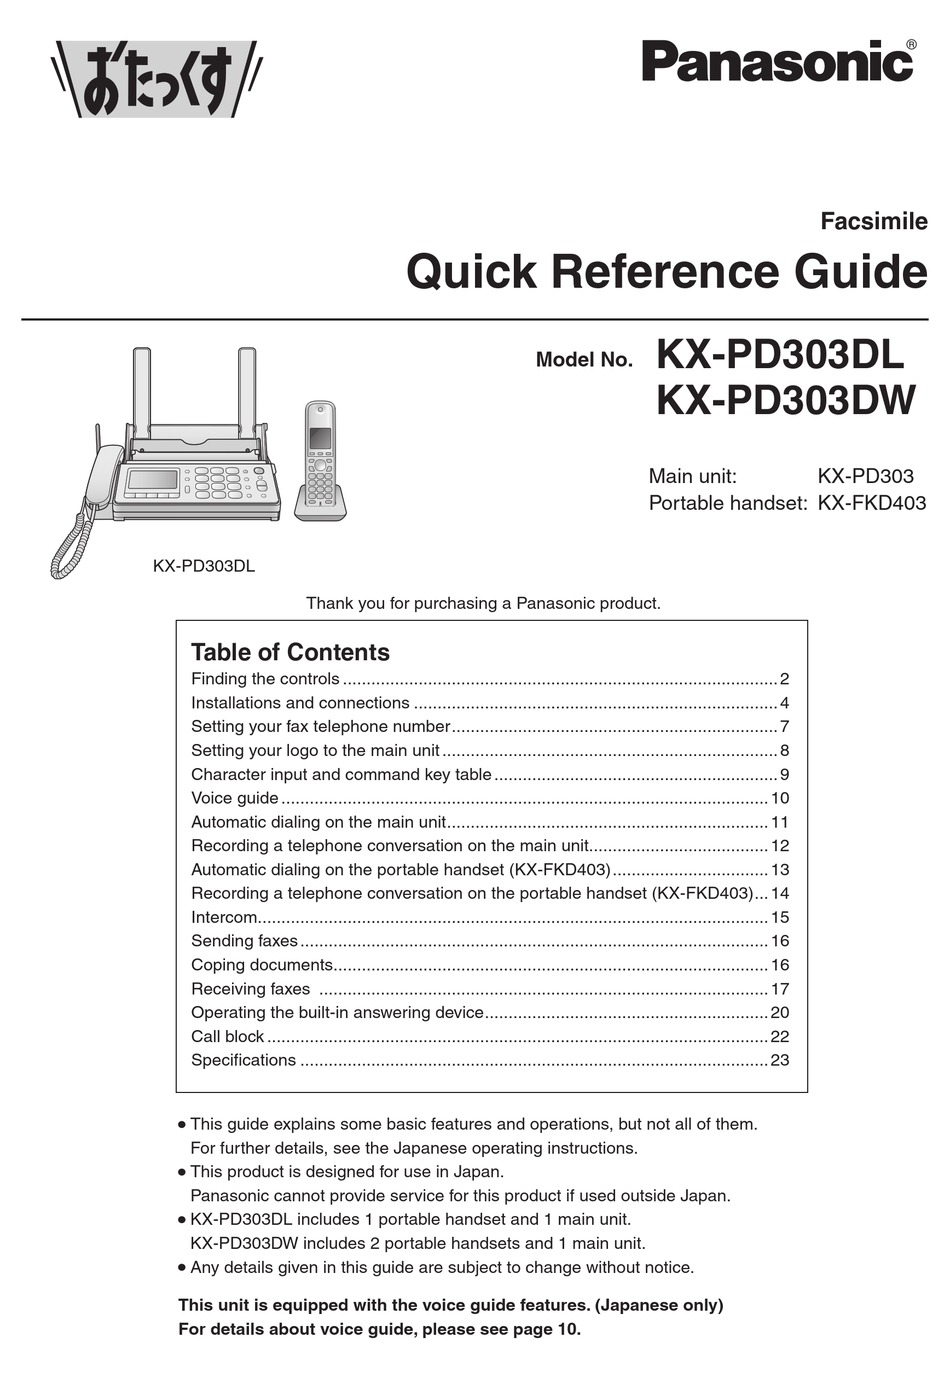 PANASONIC KX-PD303DL QUICK REFERENCE MANUAL Pdf Download | ManualsLib